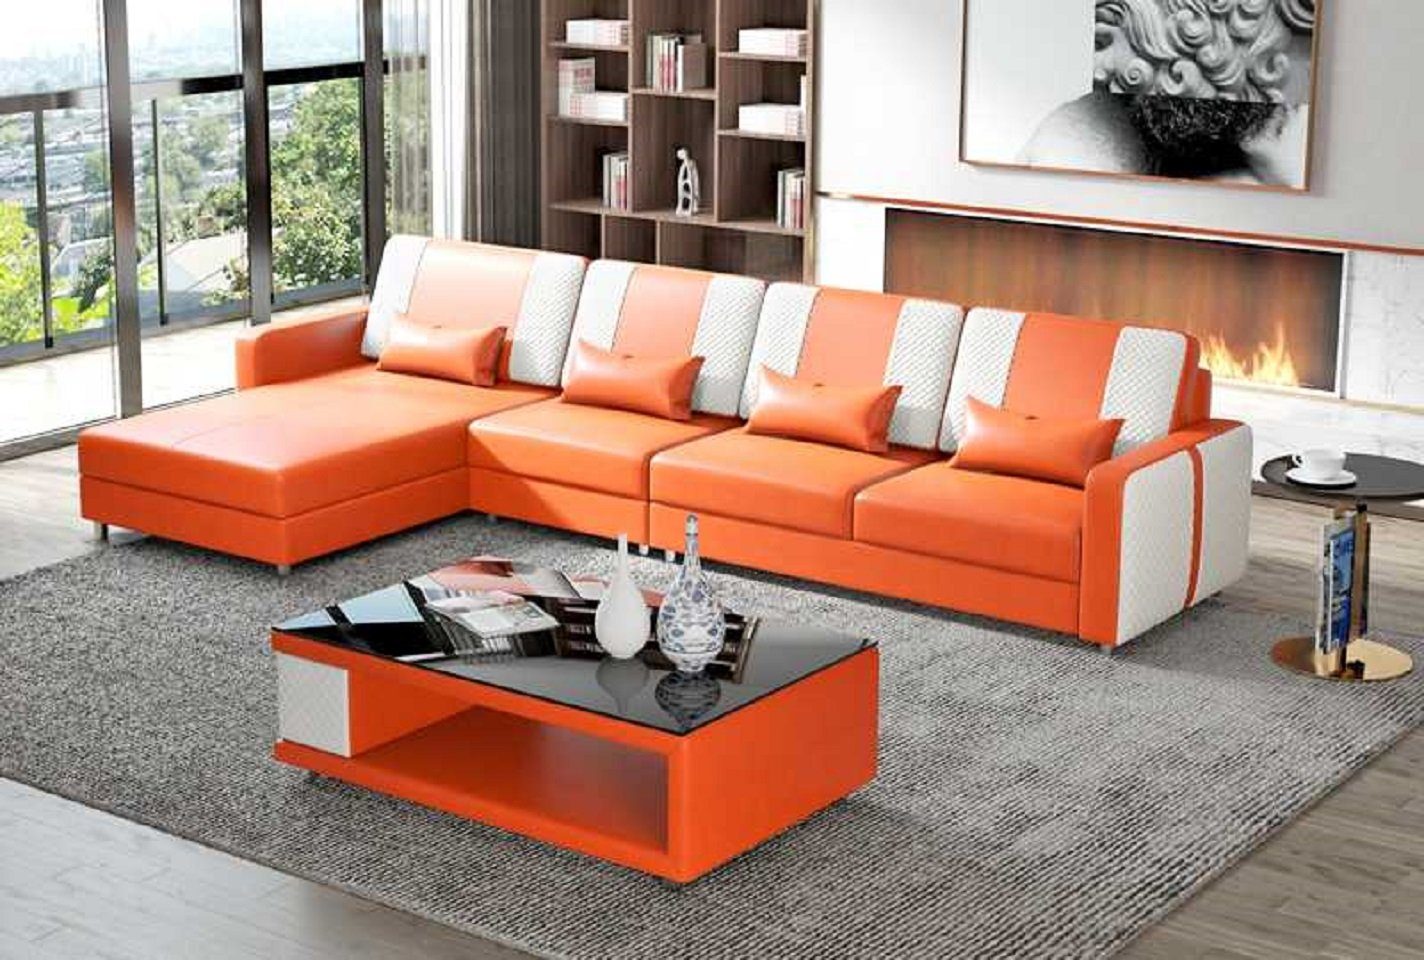 Ecksofa Europe Neu, Ecksofa Couch Liege Modern Form Made in 3 Sofa Eckgarnitur JVmoebel L Luxus Orange Teile,